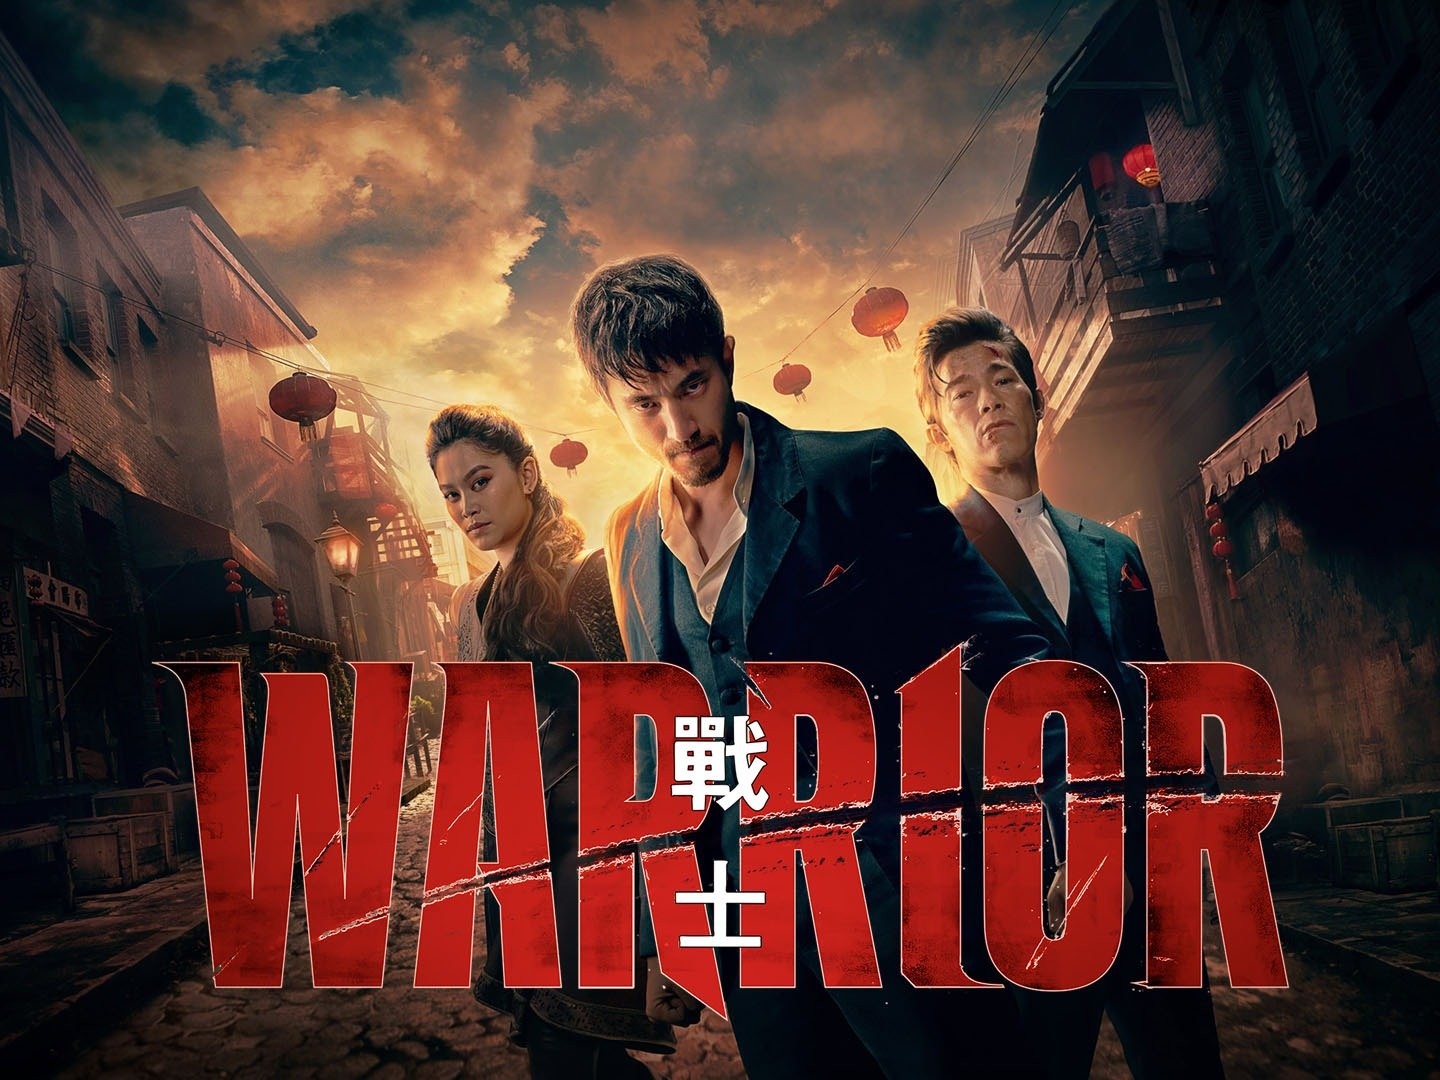 Seems Warrior Season 3 has wrapped filming! : r/WarriorTV